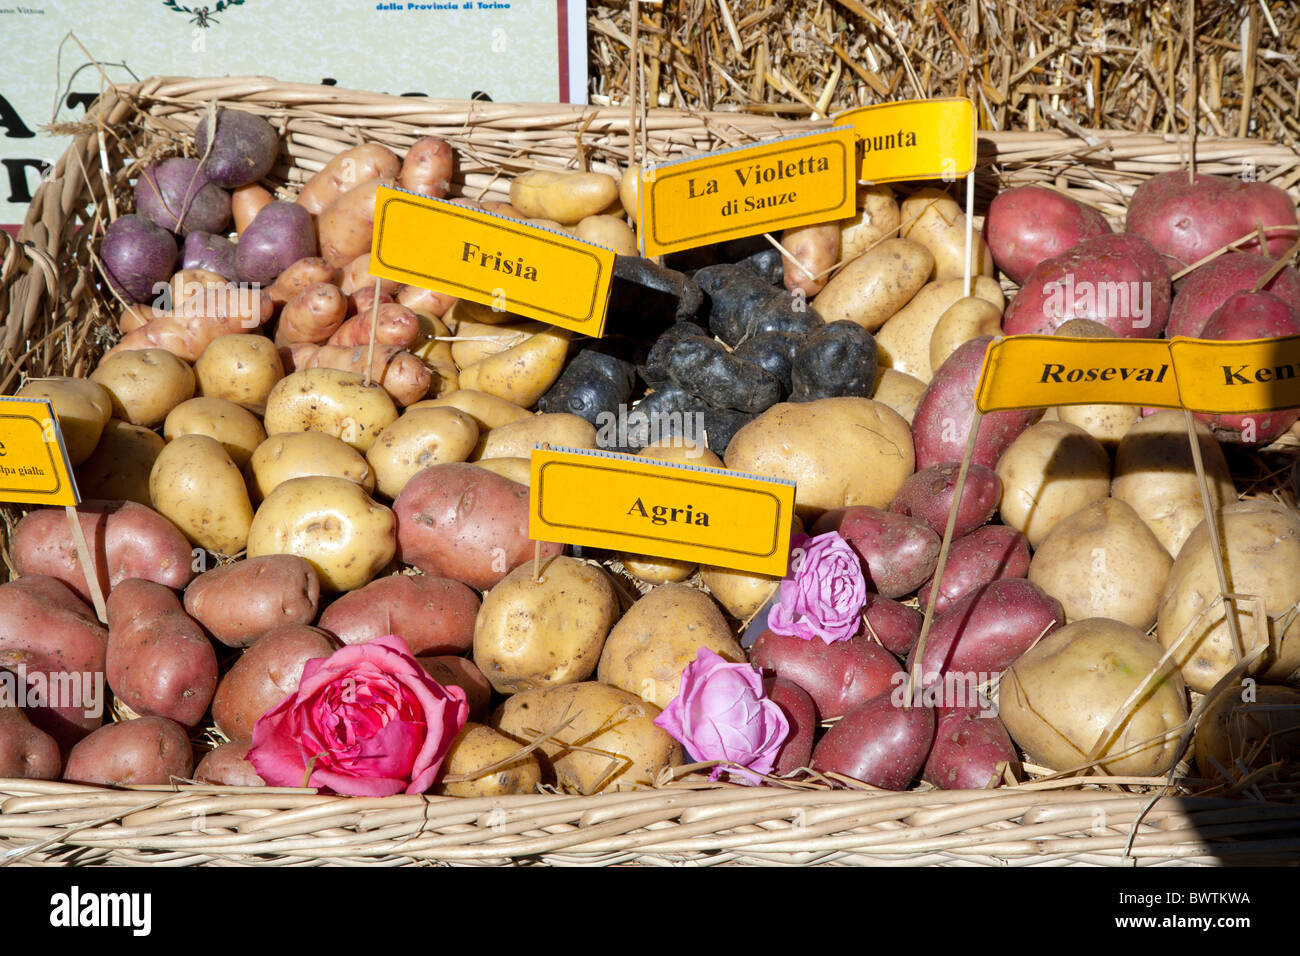 Varieties of potato in a basket, Piemonte, italy Stock Photo